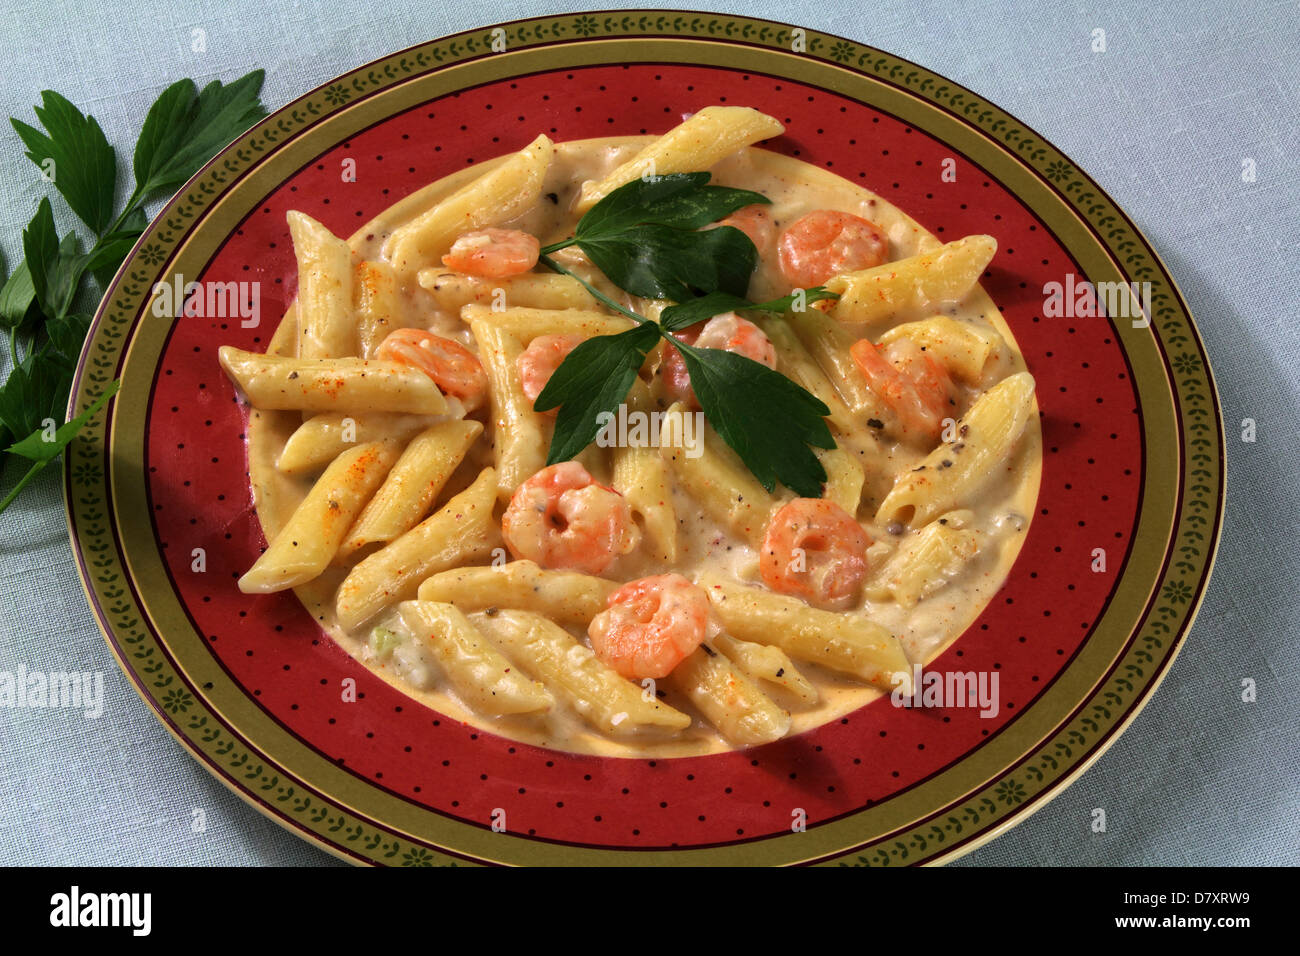 Shrimp and pasta dish Stock Photo